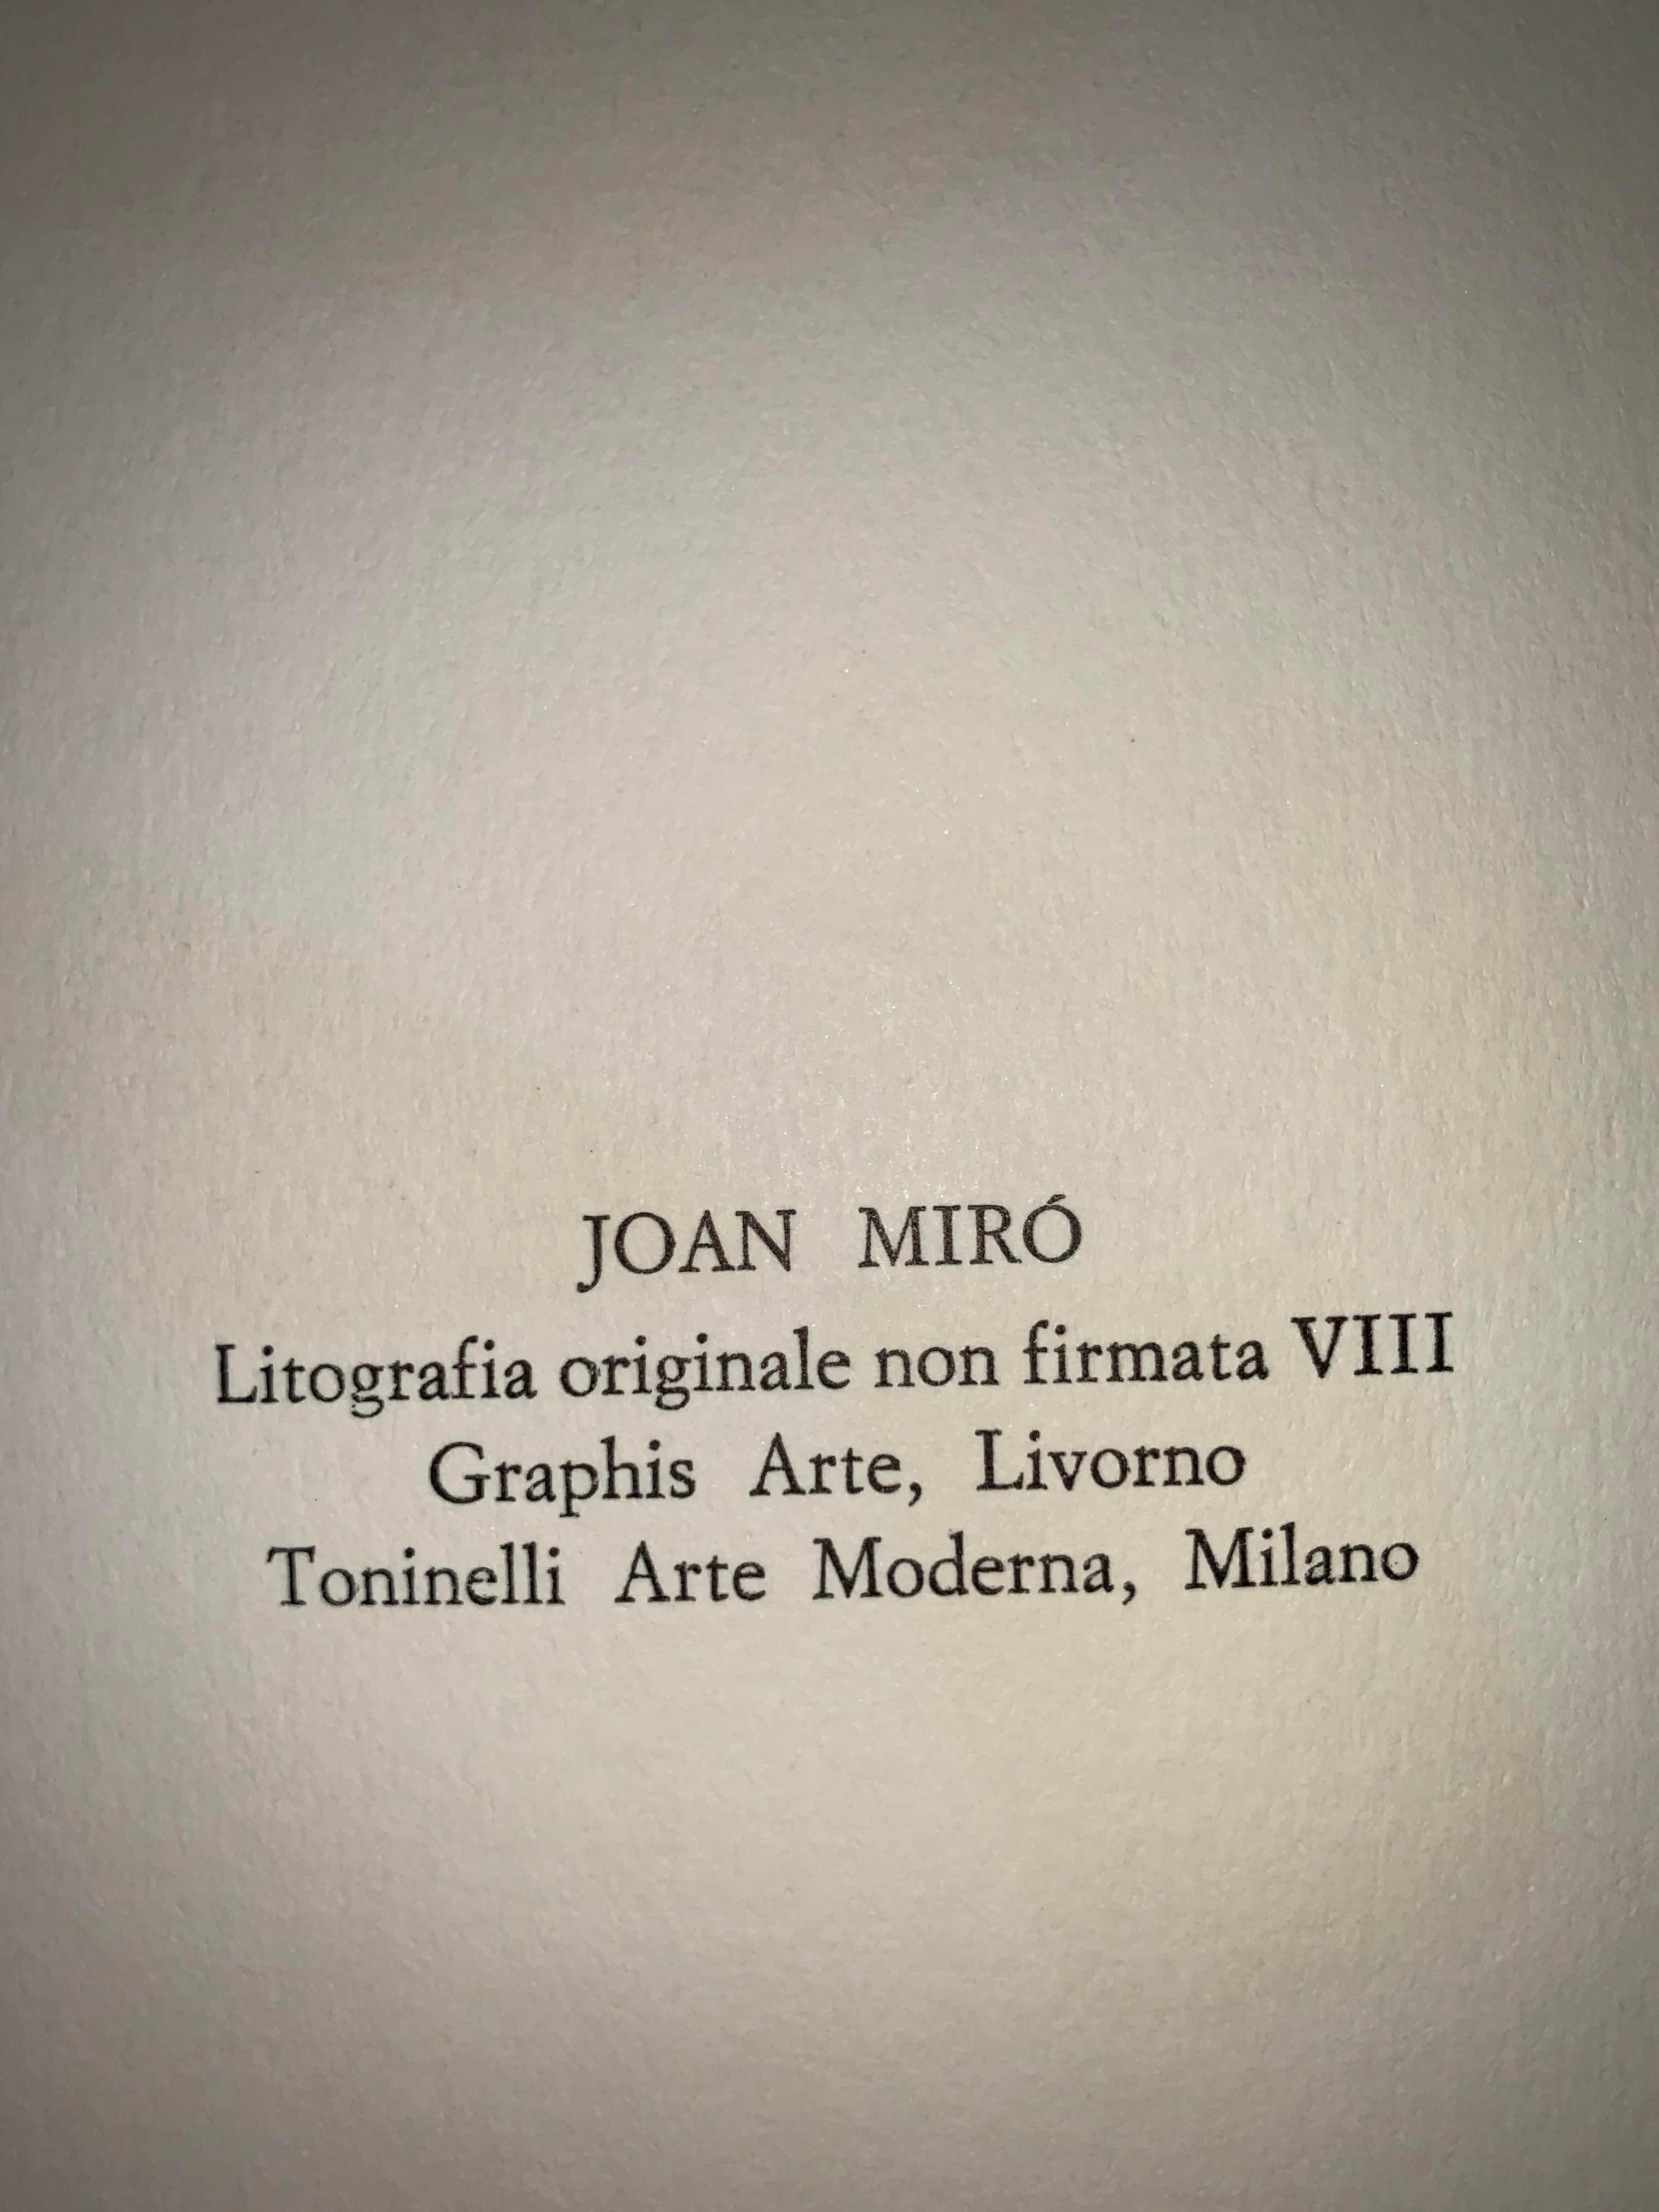 Joan Miro - Litografia Originale non Firmata VIII - Surrealist - 1975 - Print by Joan Miró